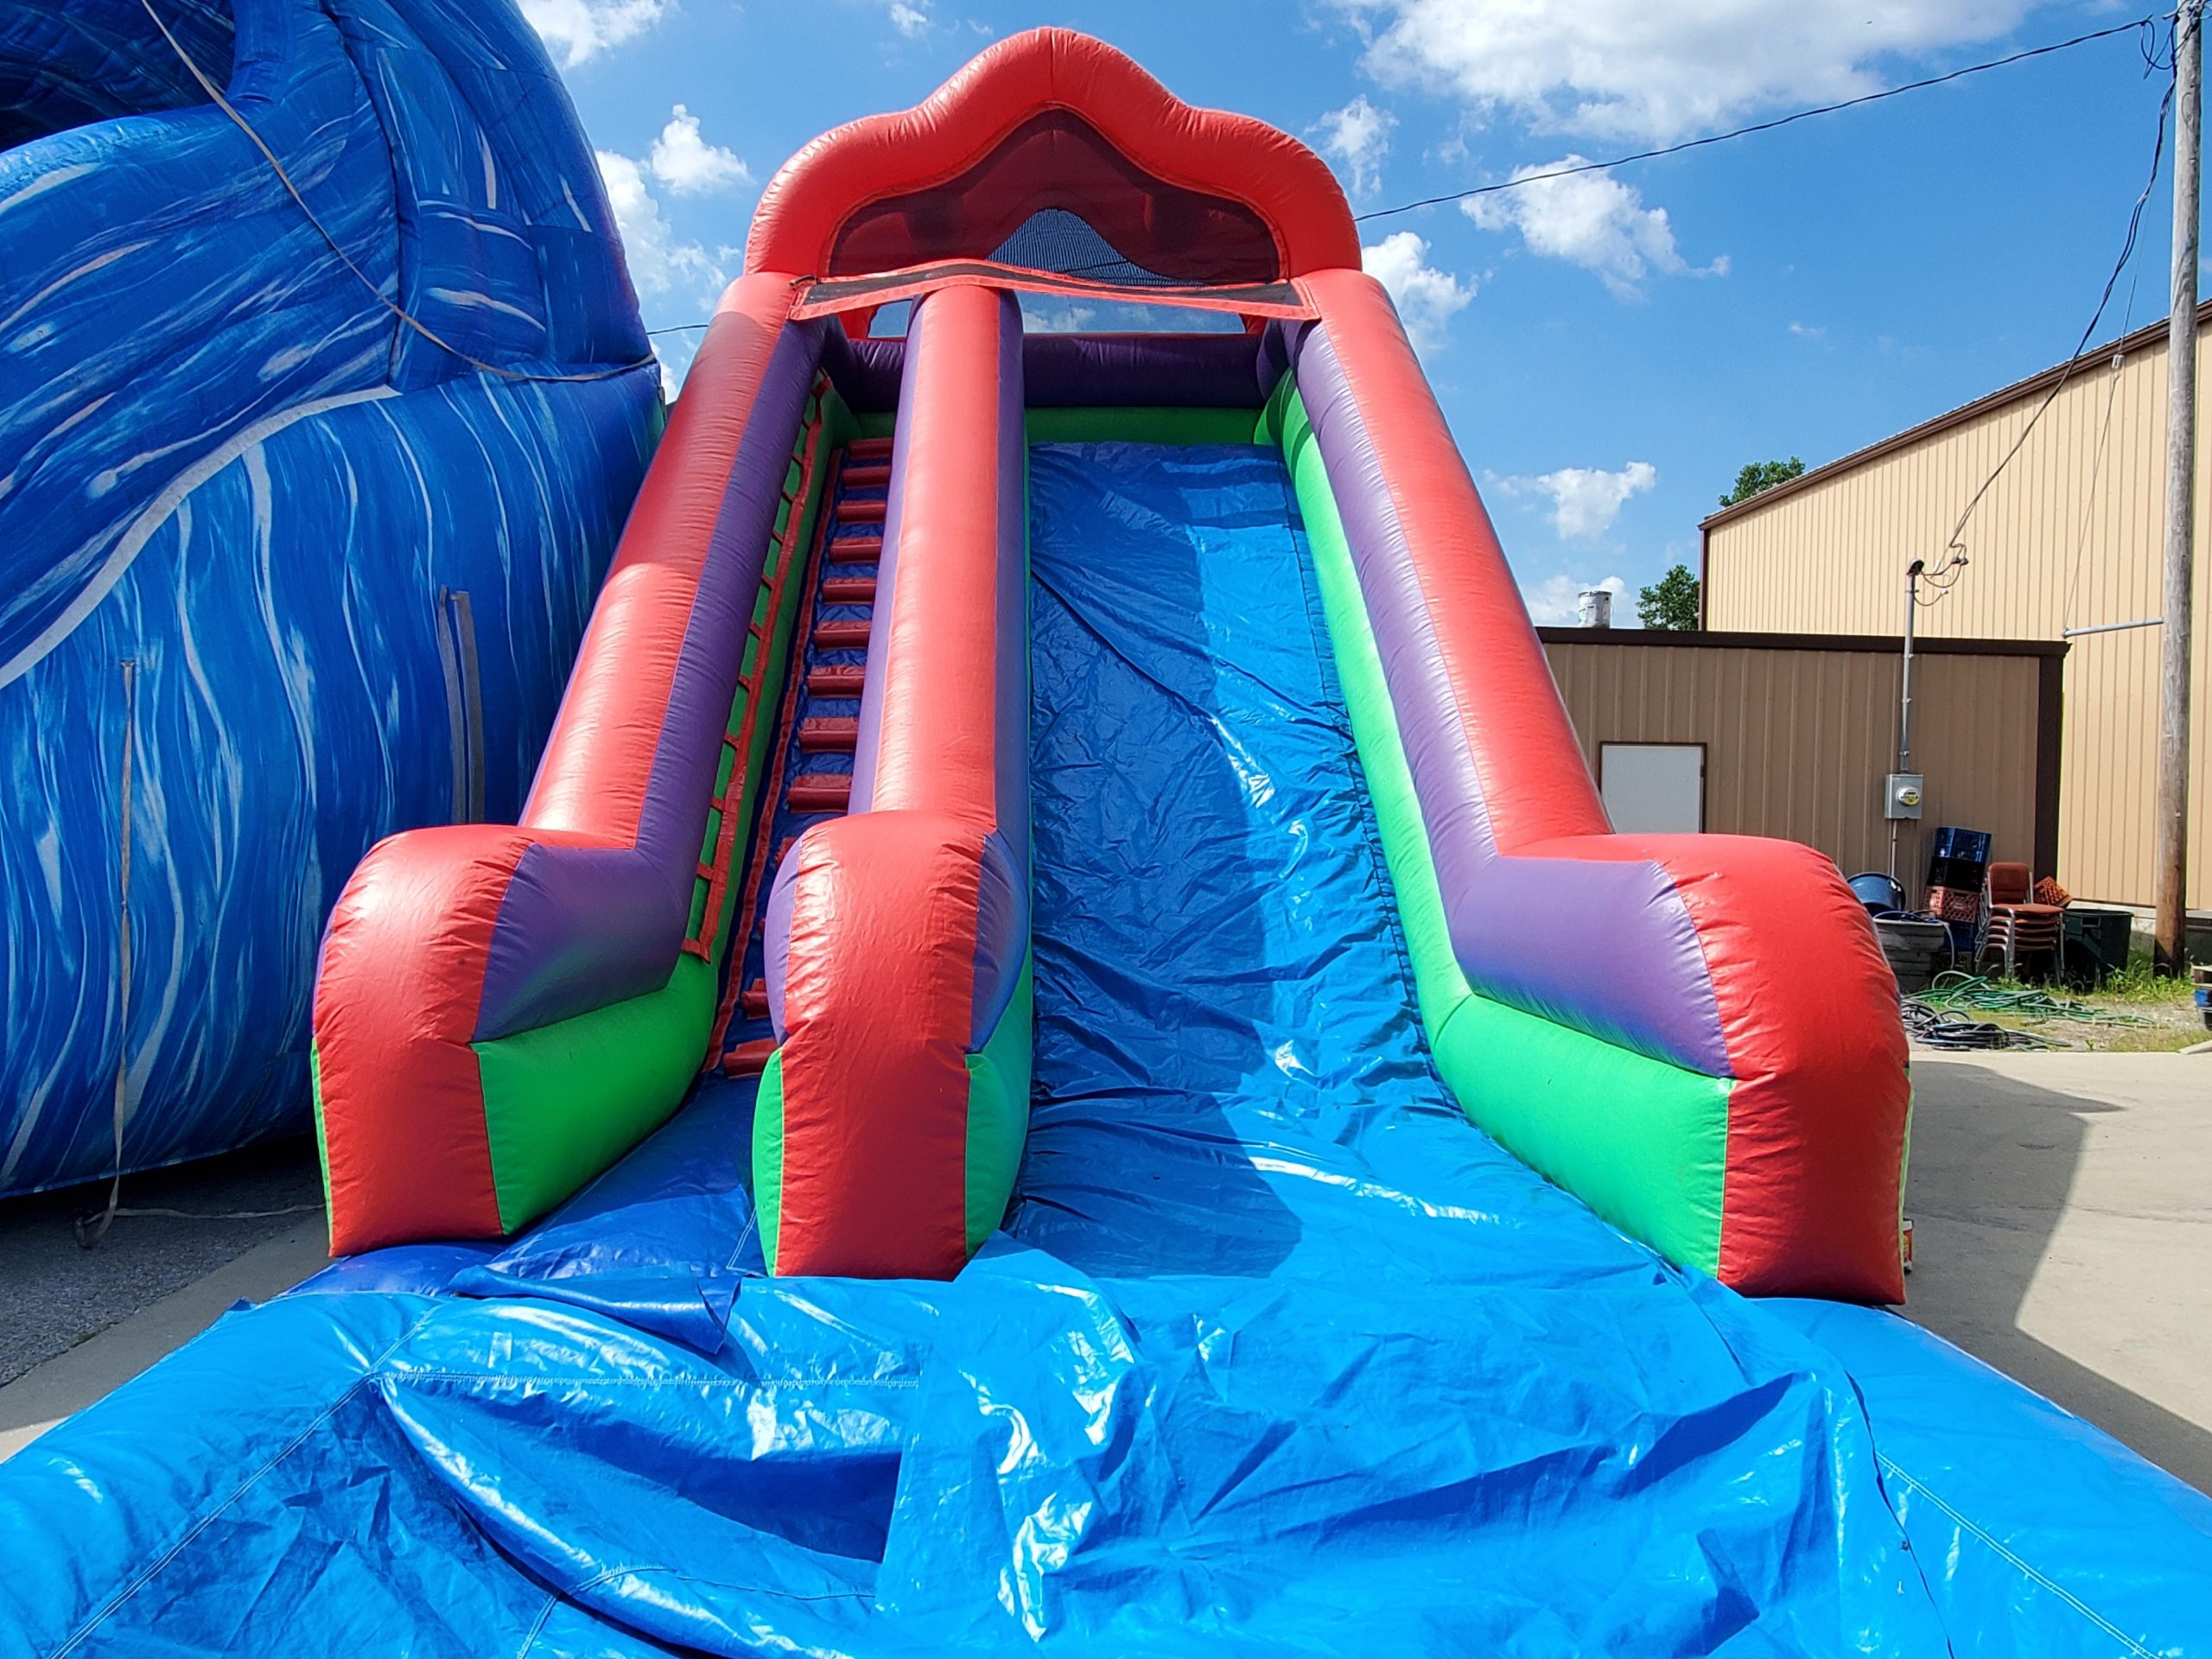 Wild Splash Inflatable Water Slide Rental Stl Interactives Events And Rentals